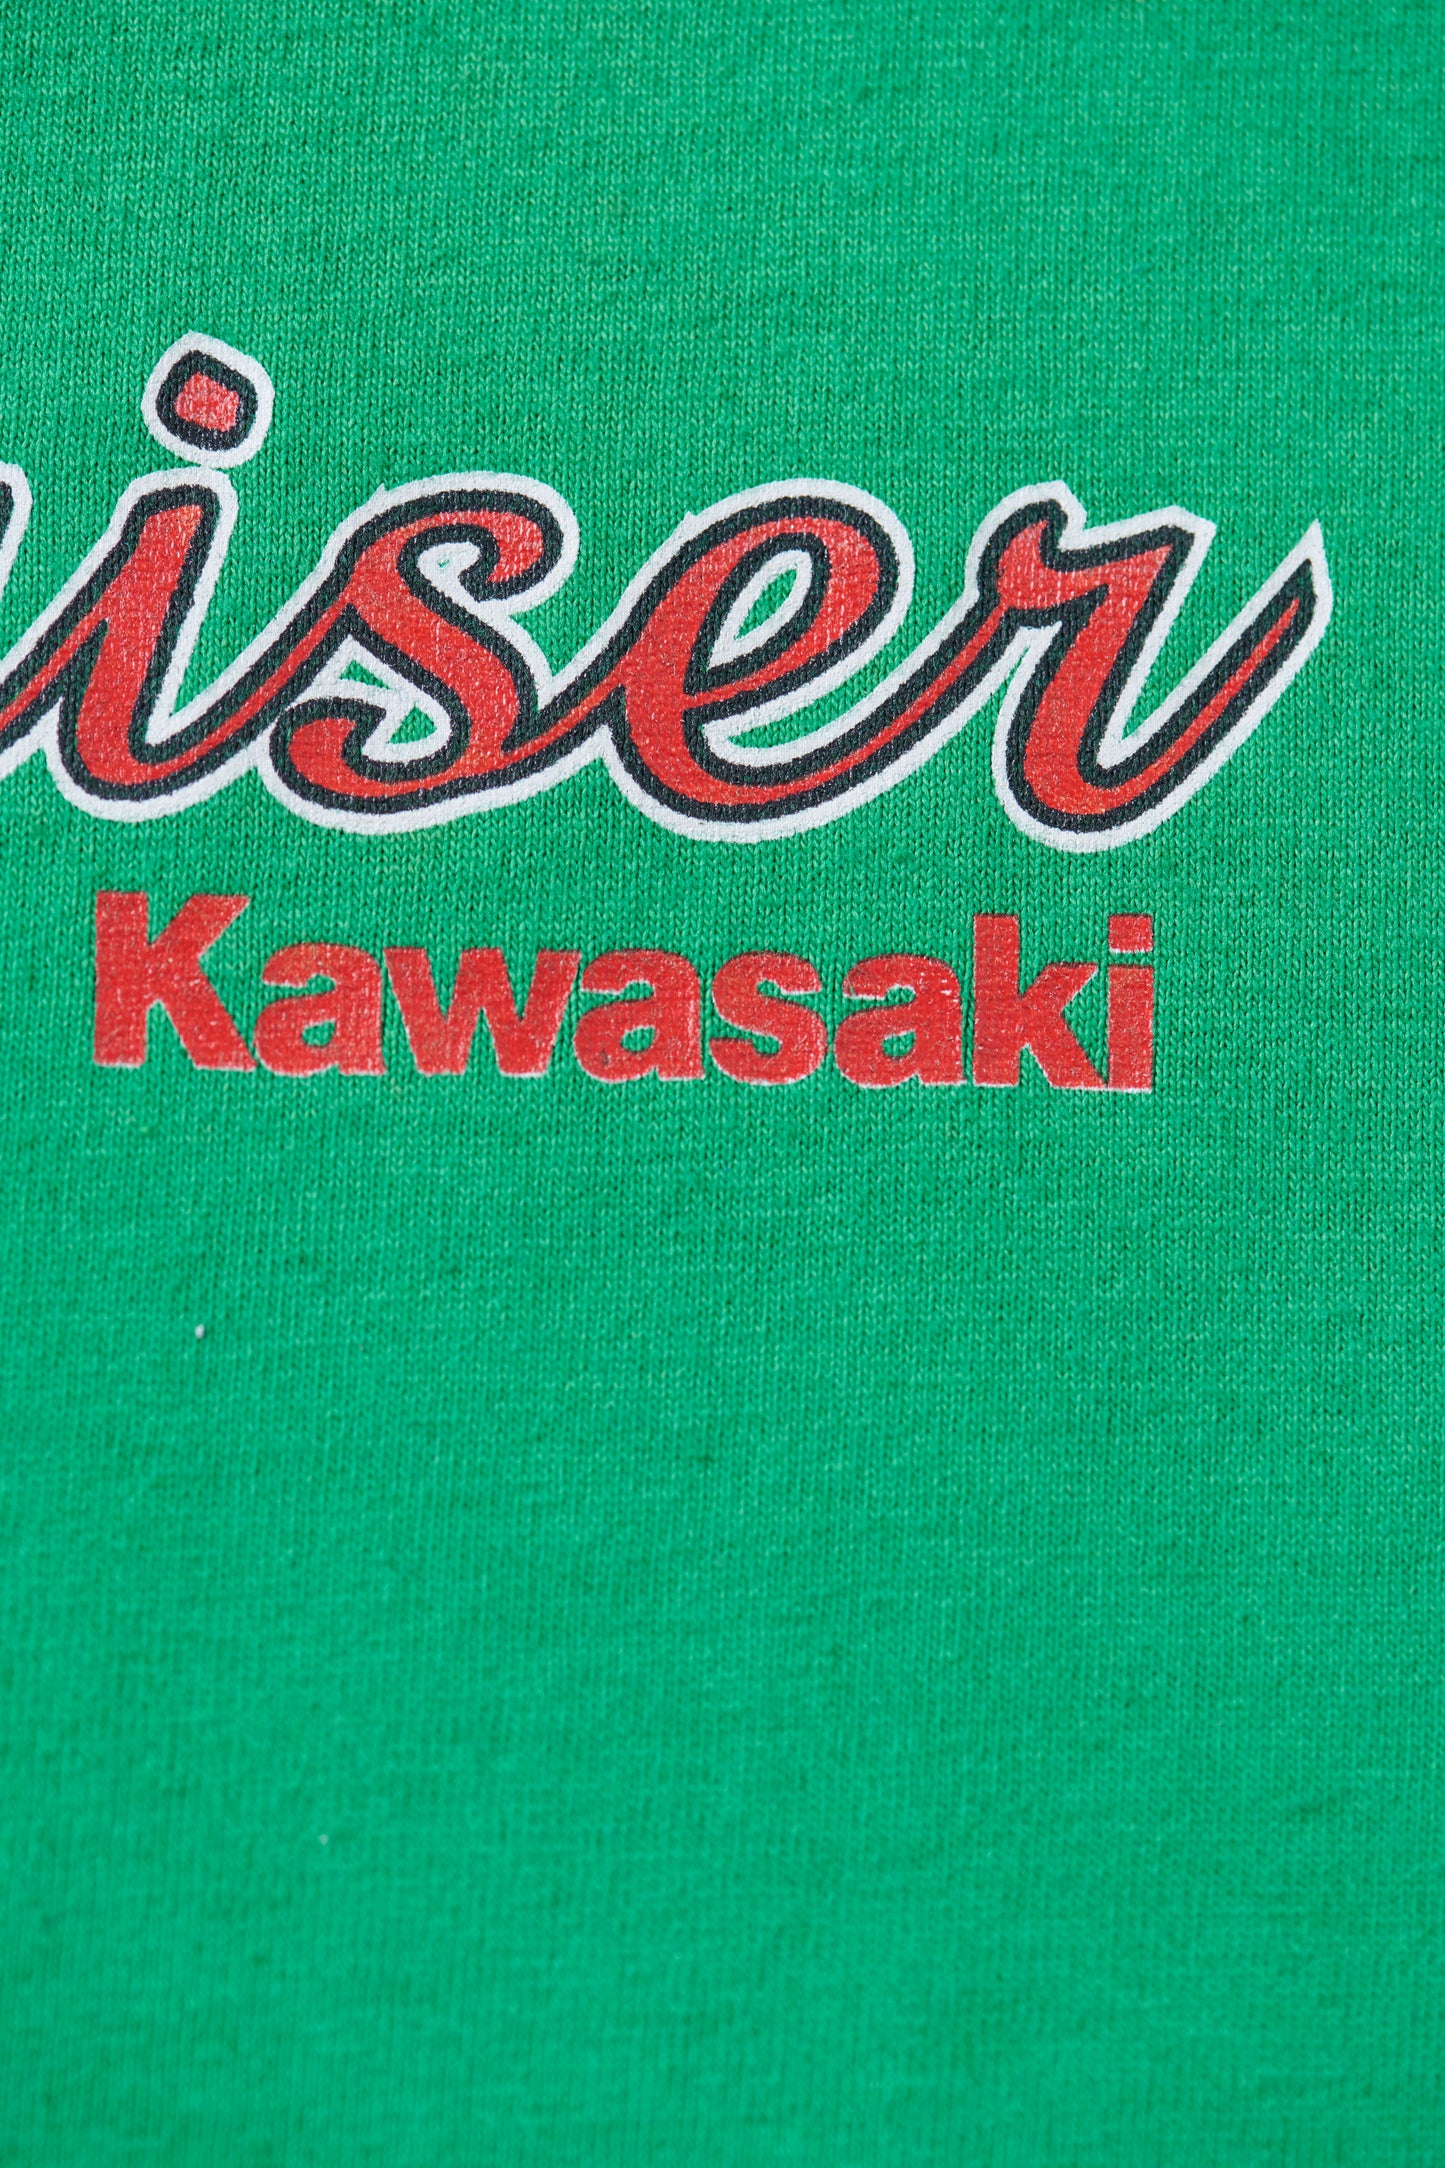 Kawasaki TEE